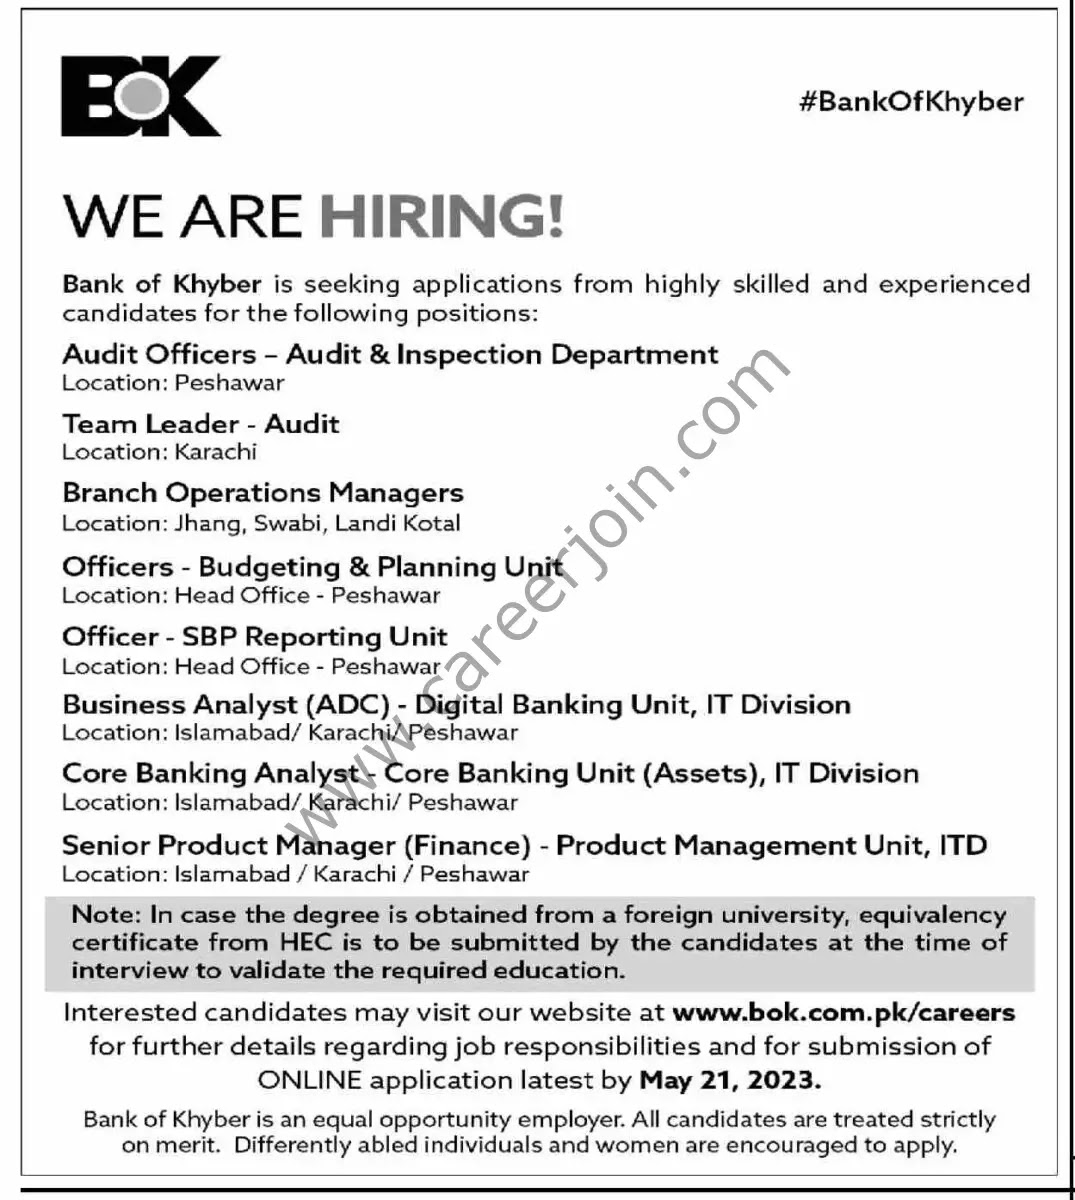 Jobs in BOK Bank of Khyber